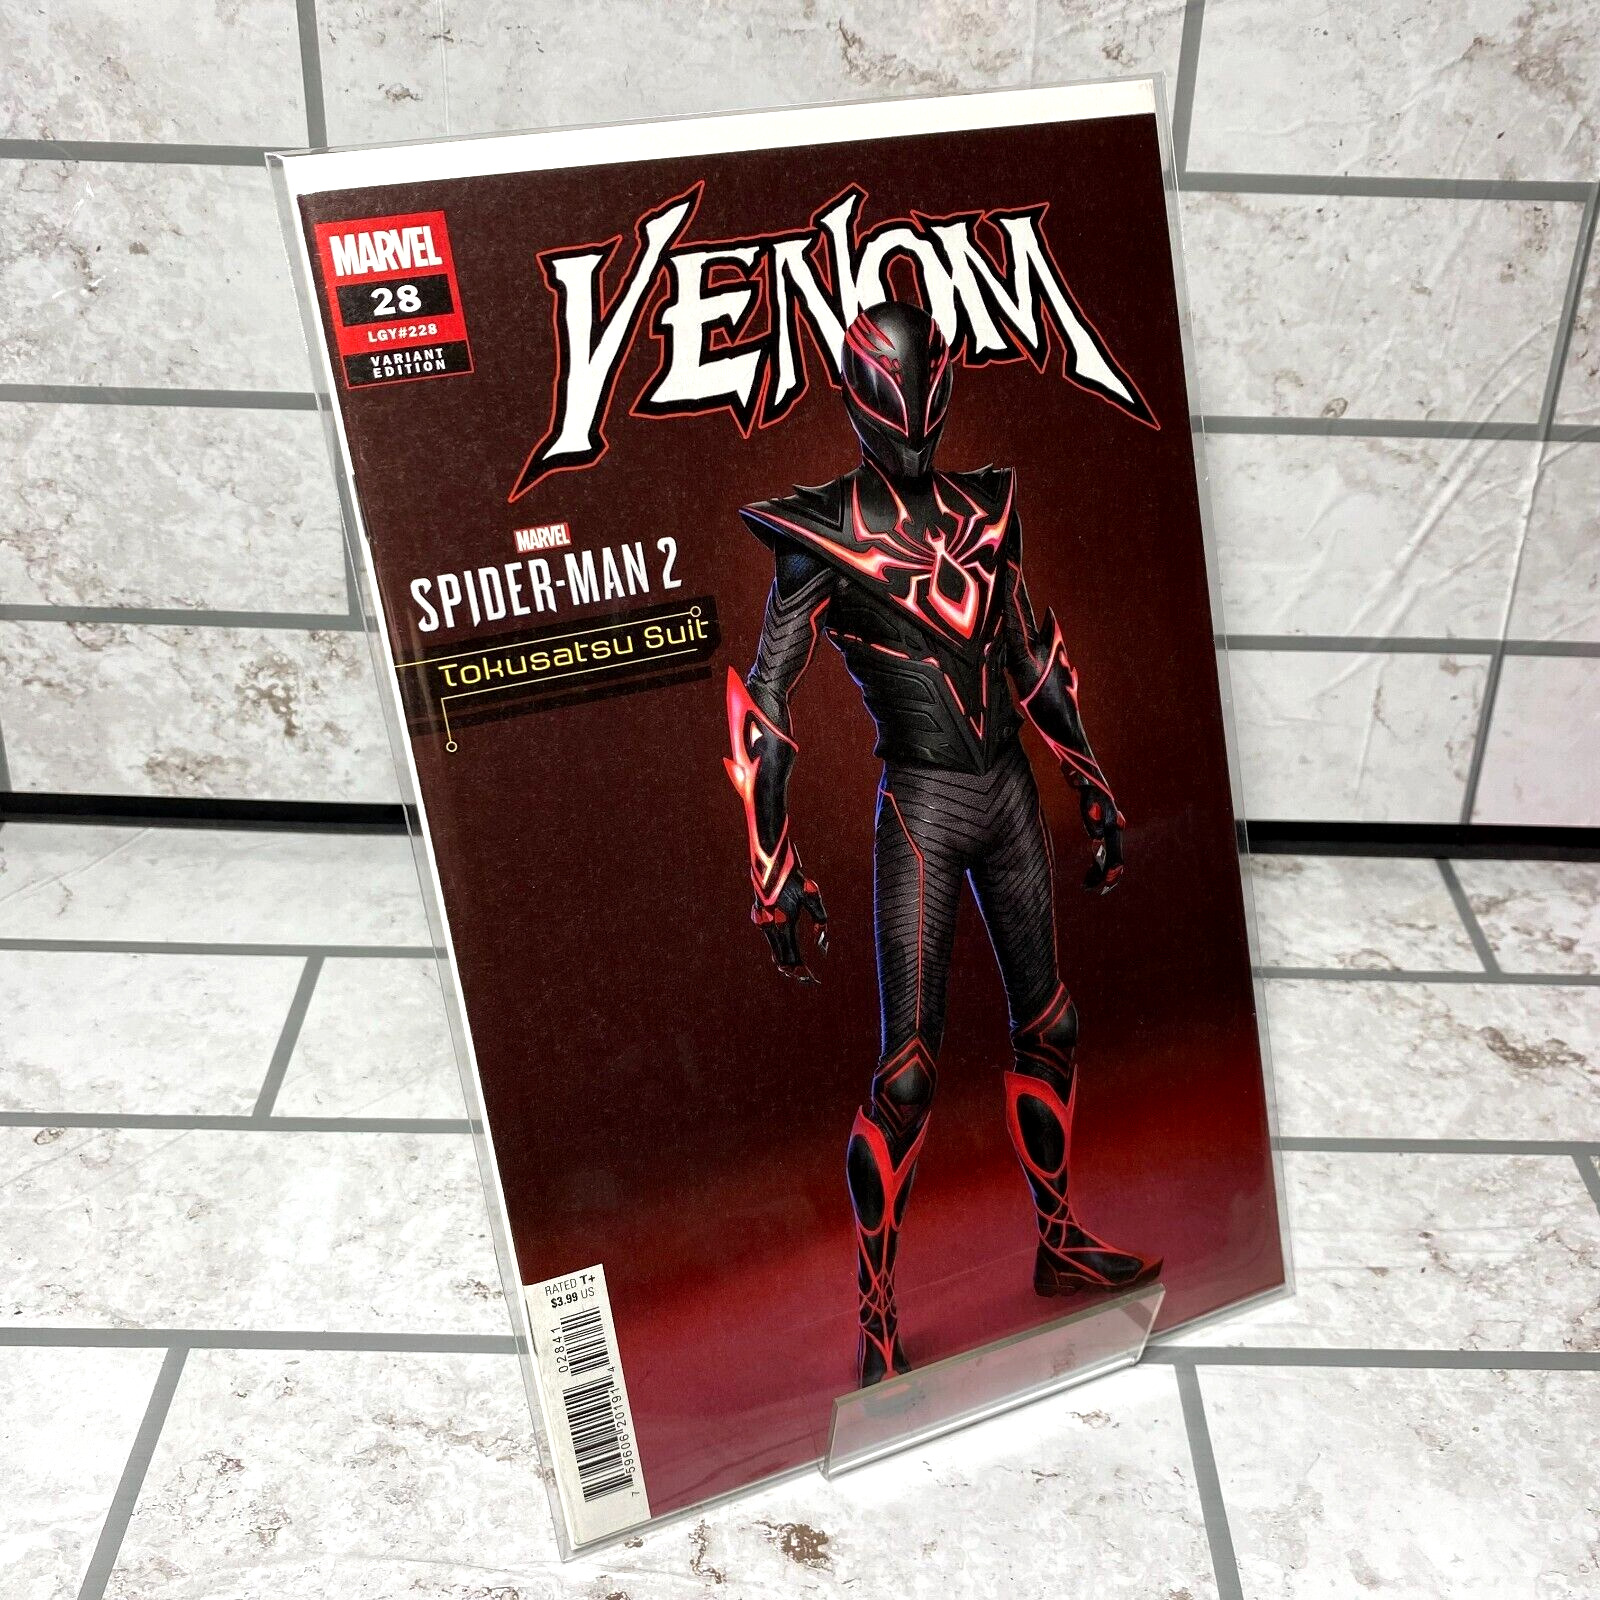 Venom #28 Tokusatsu Suit Spider-Man 2 Video Game Variant Cover